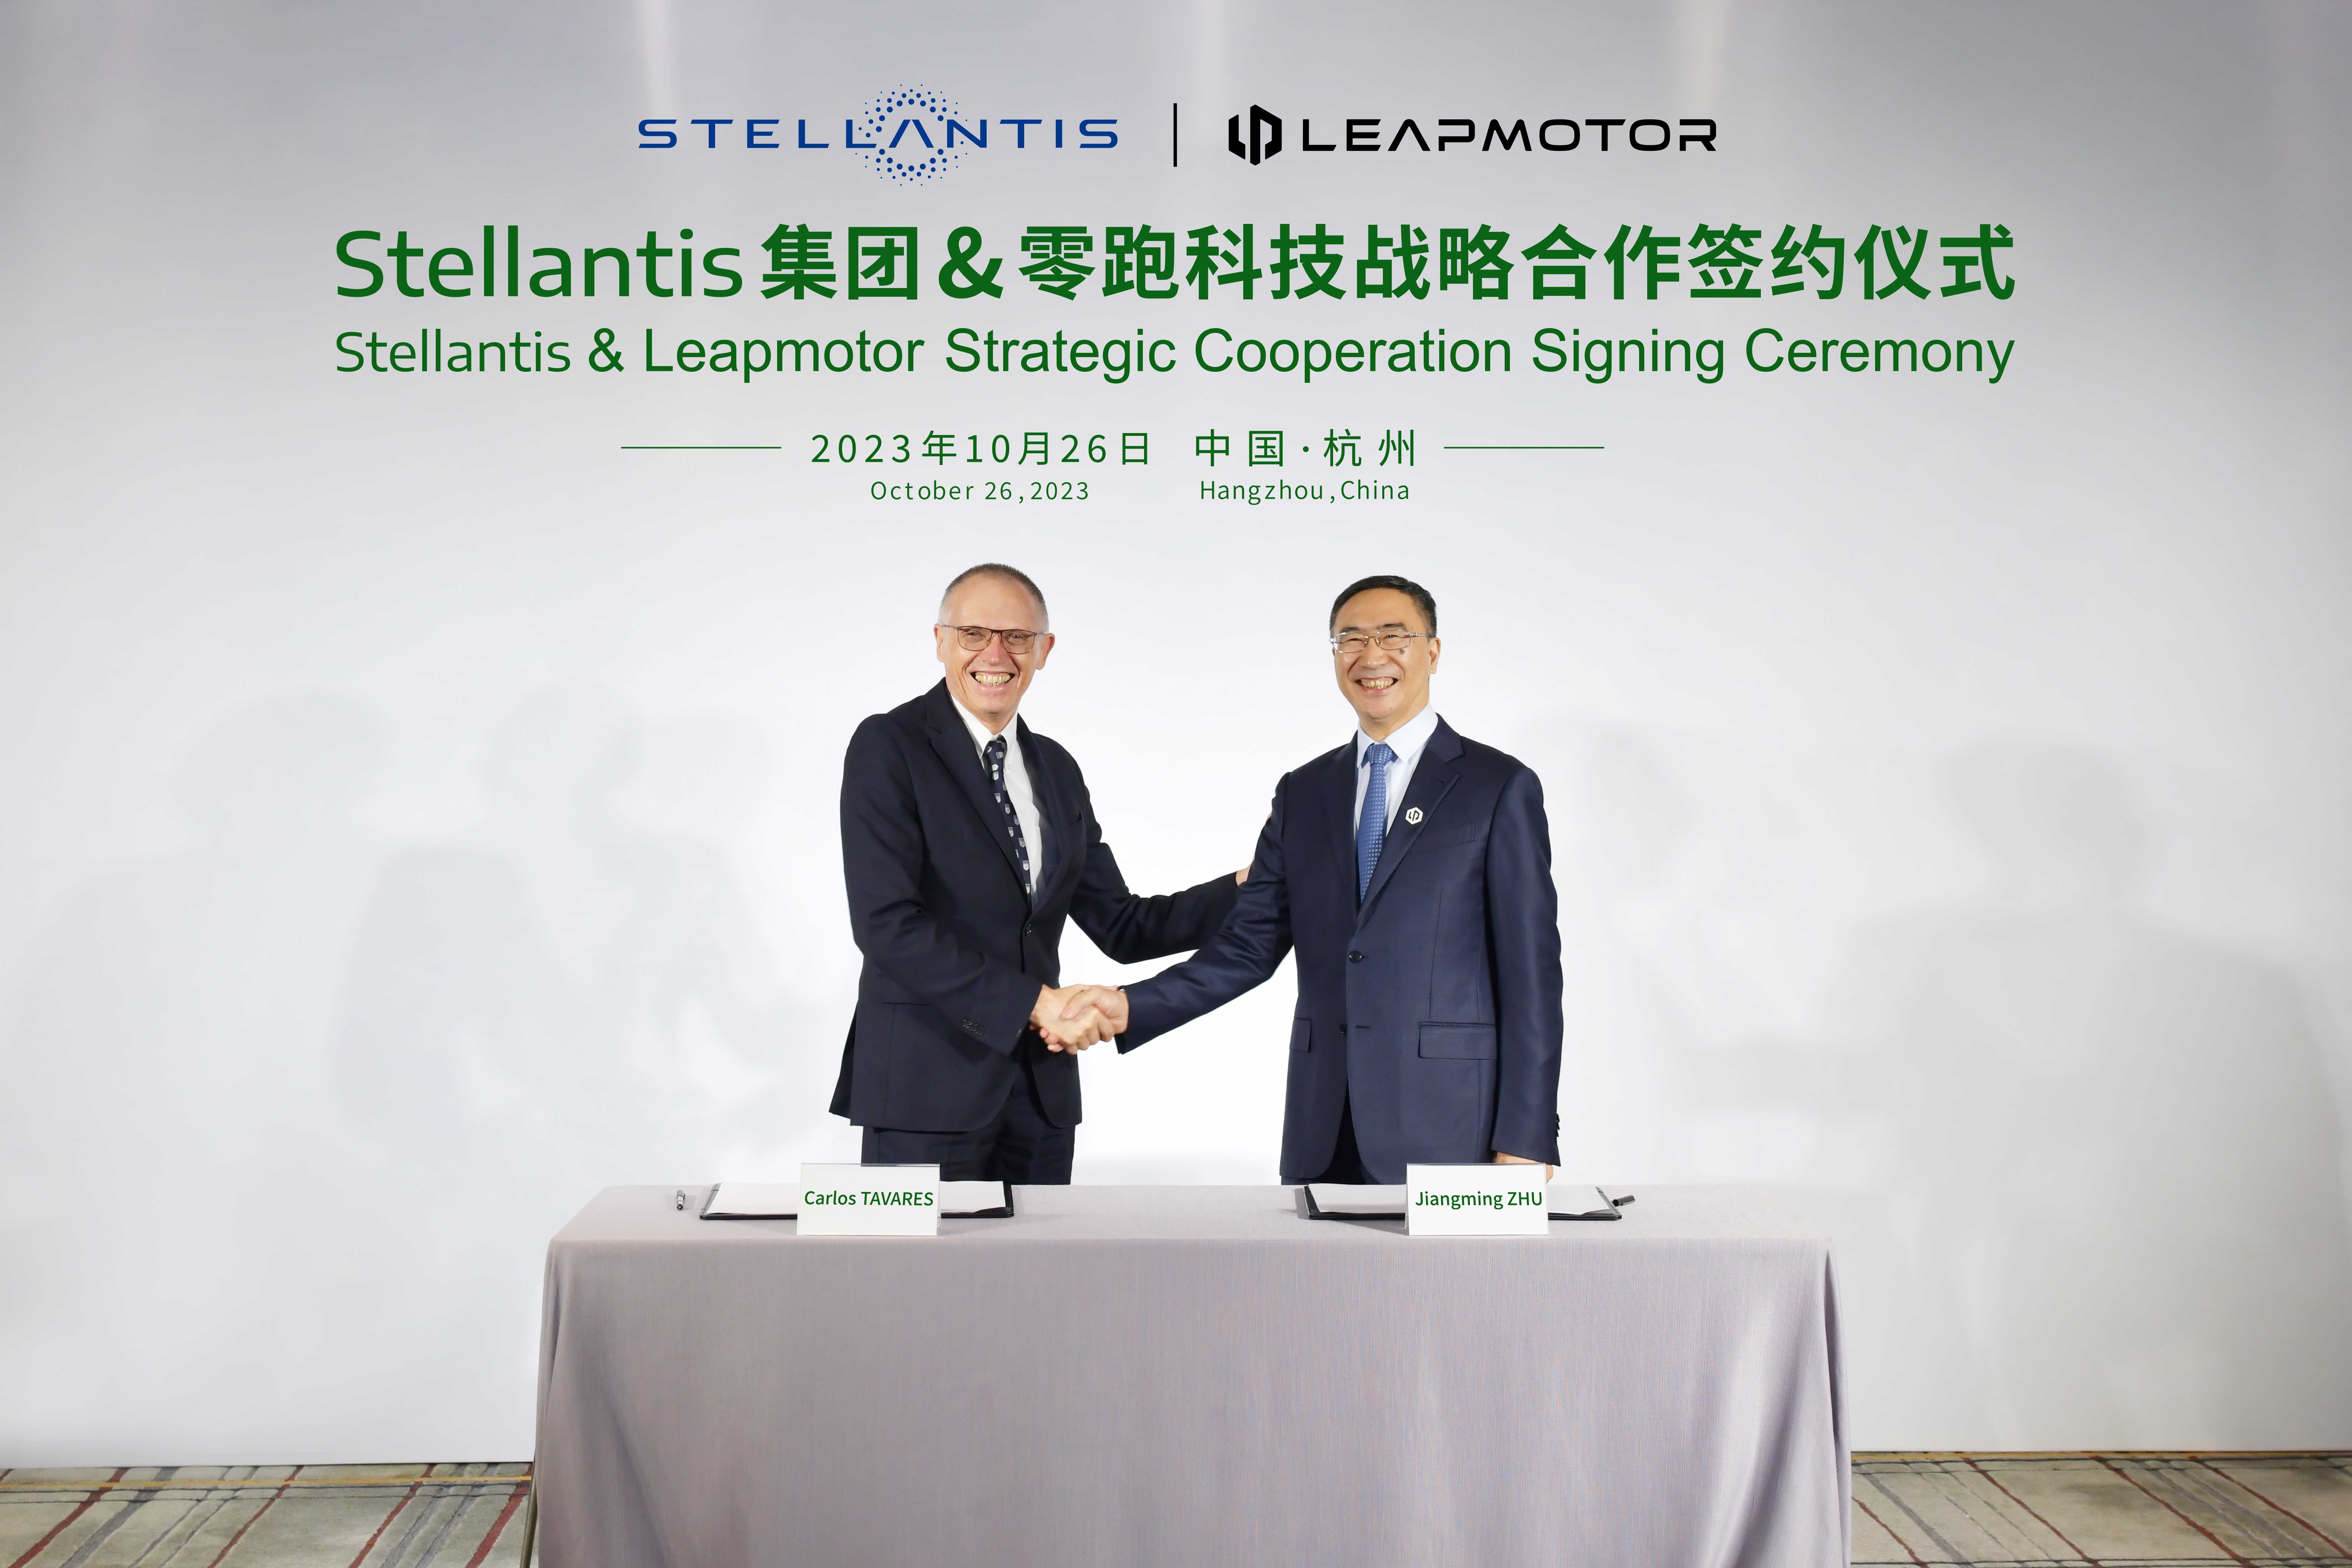 Stellantis and Leapmotor Strategic Partnership - Carlos Tavares, Stellantis CEO and Zhu Jiangming, Leapmotor Founder and CEO